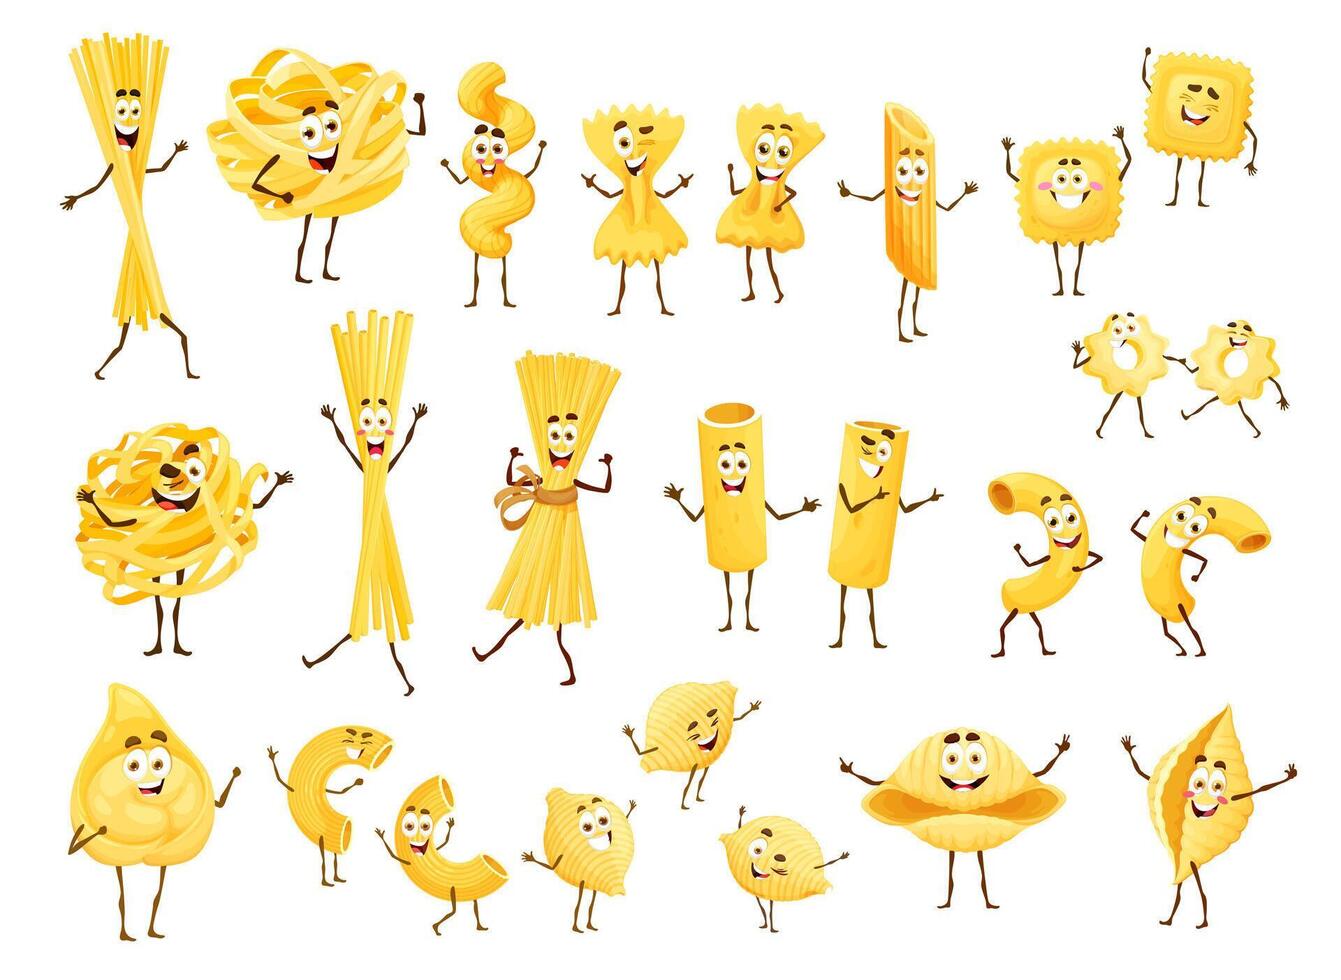 Cartoon pasta characters, Italian cuisine macaroni vector